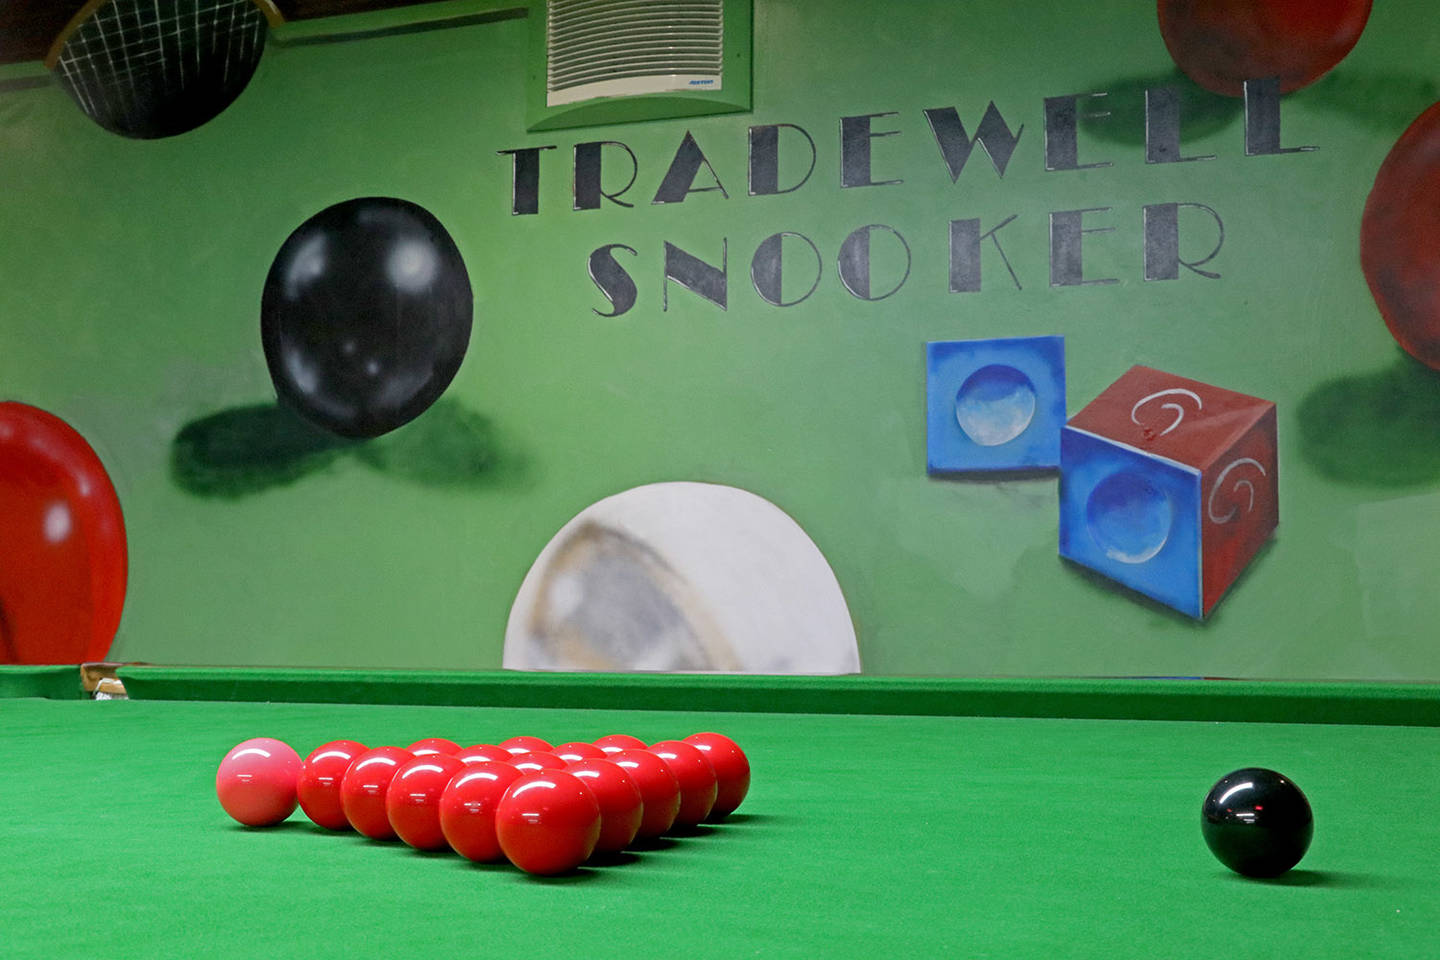 Tradewell Snooker Club Hull